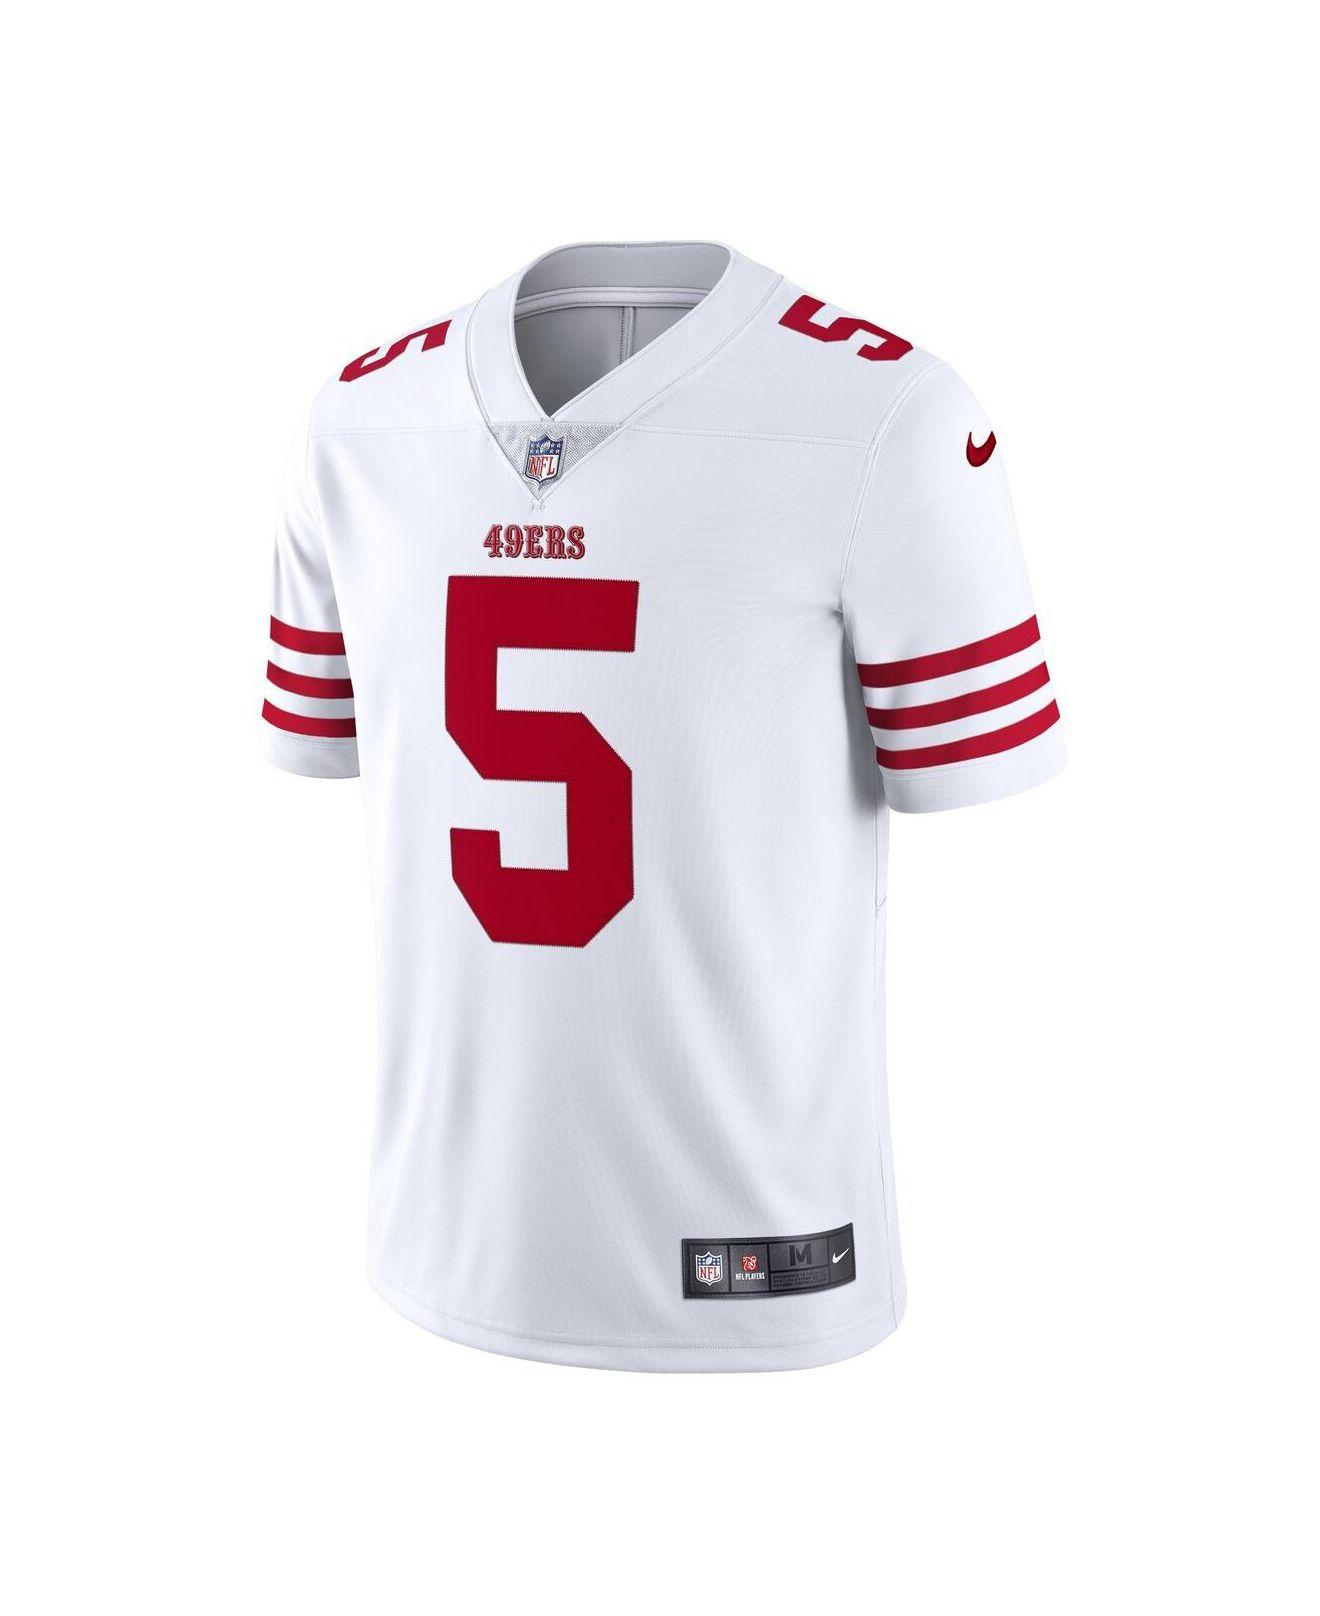 49ers nike vapor limited jersey